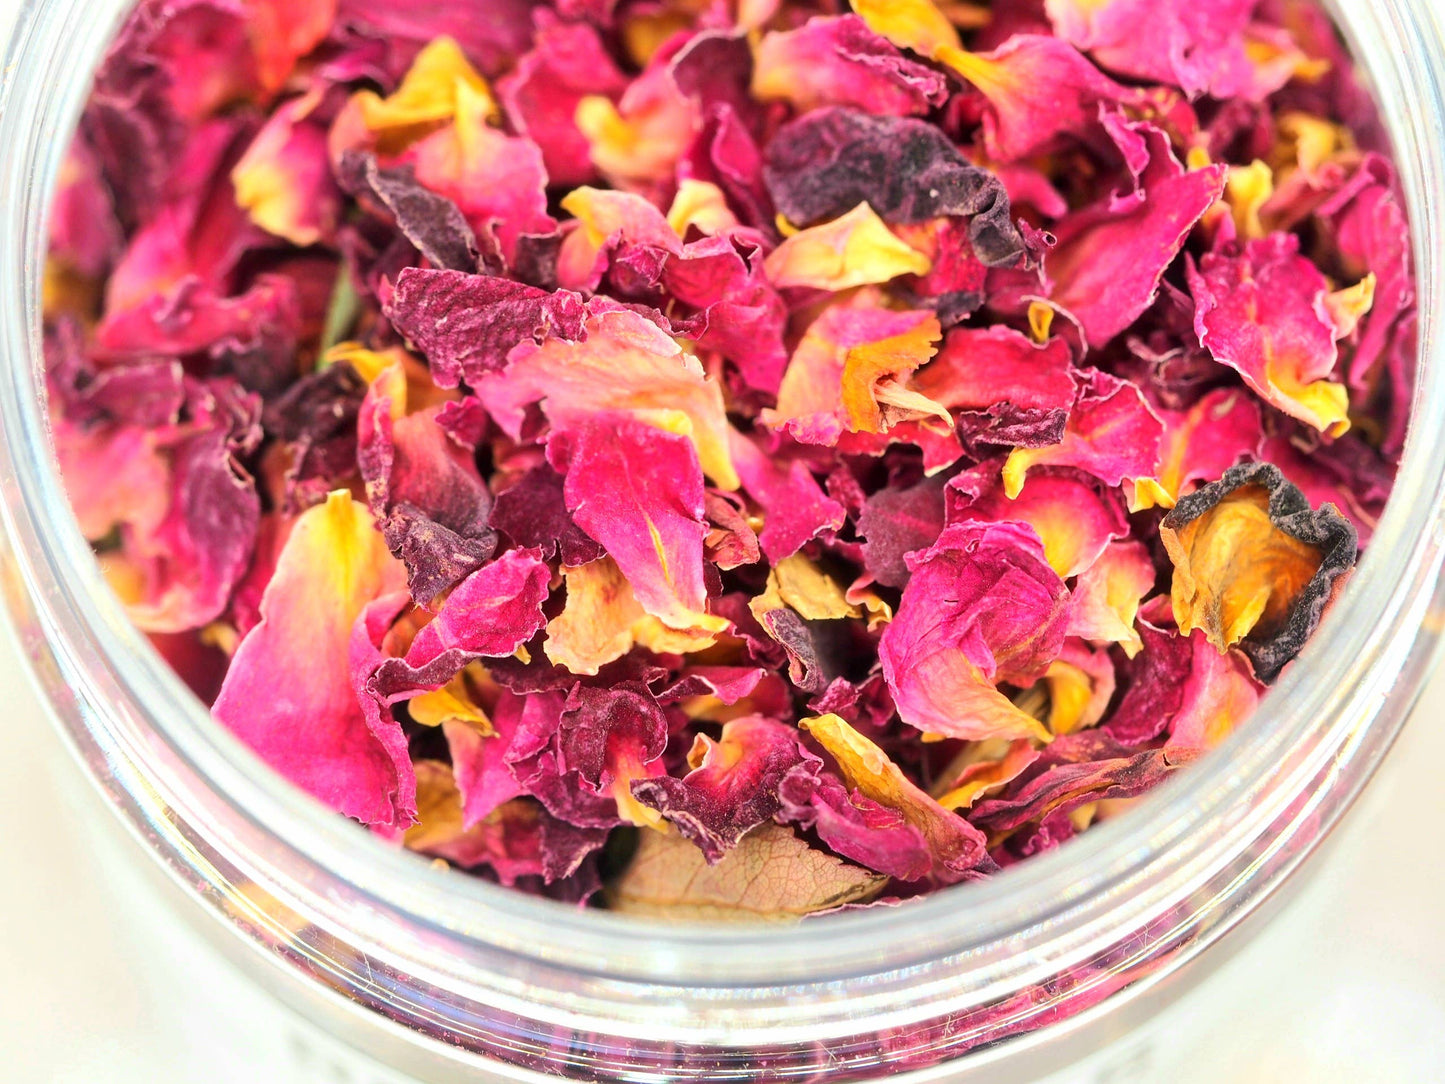 Rose Petals Tea Loose Leaf Tea Apothecary